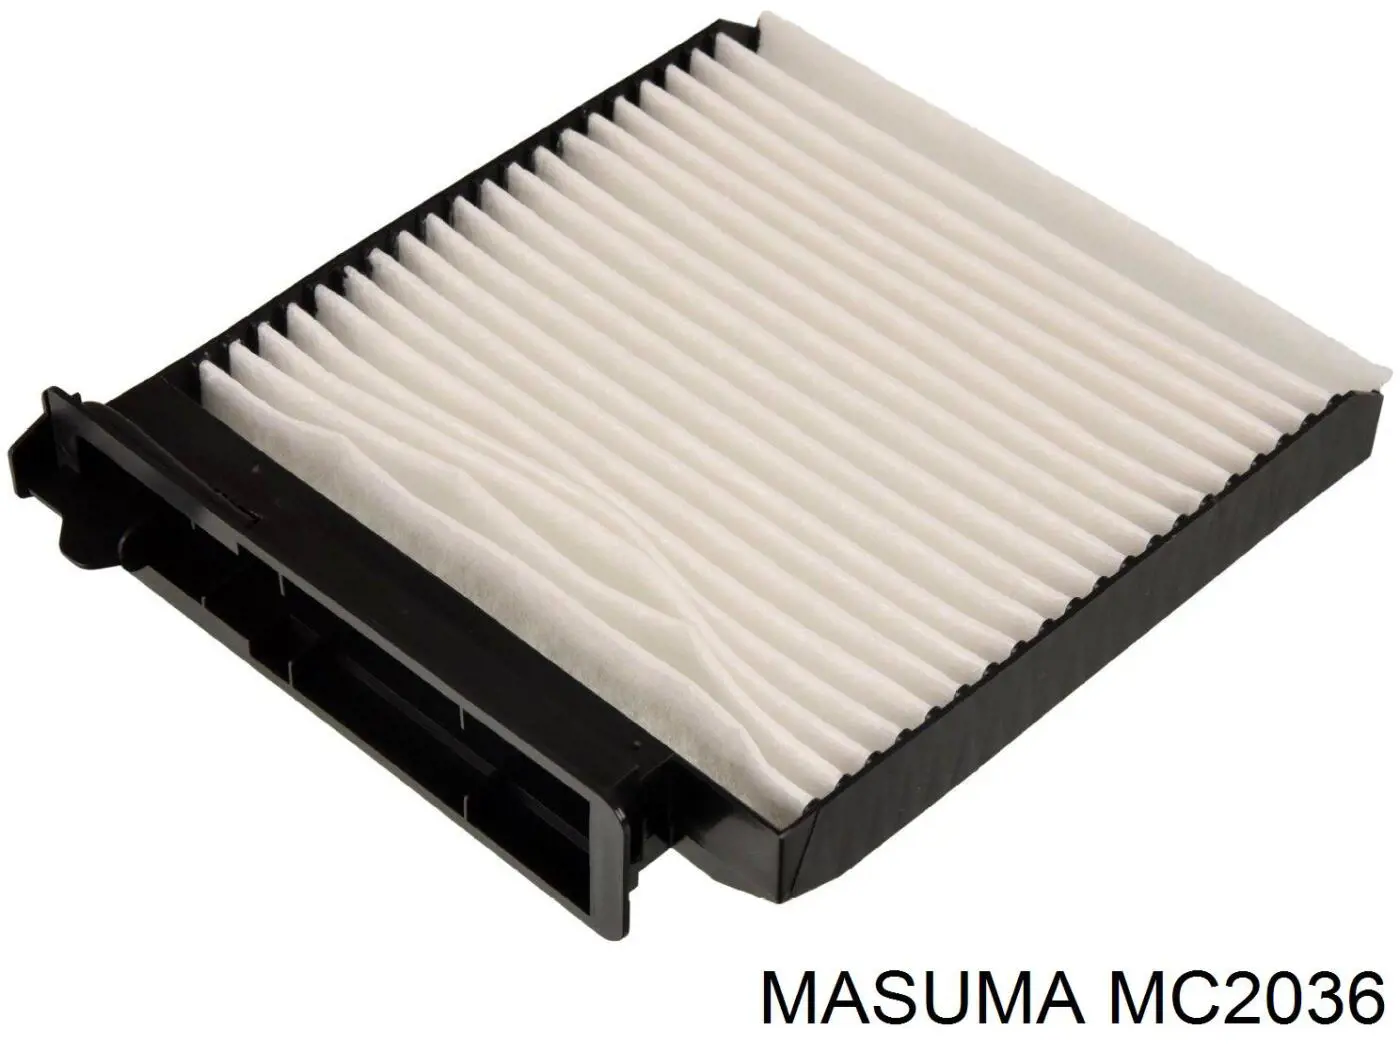 MC2036 Masuma filtro habitáculo